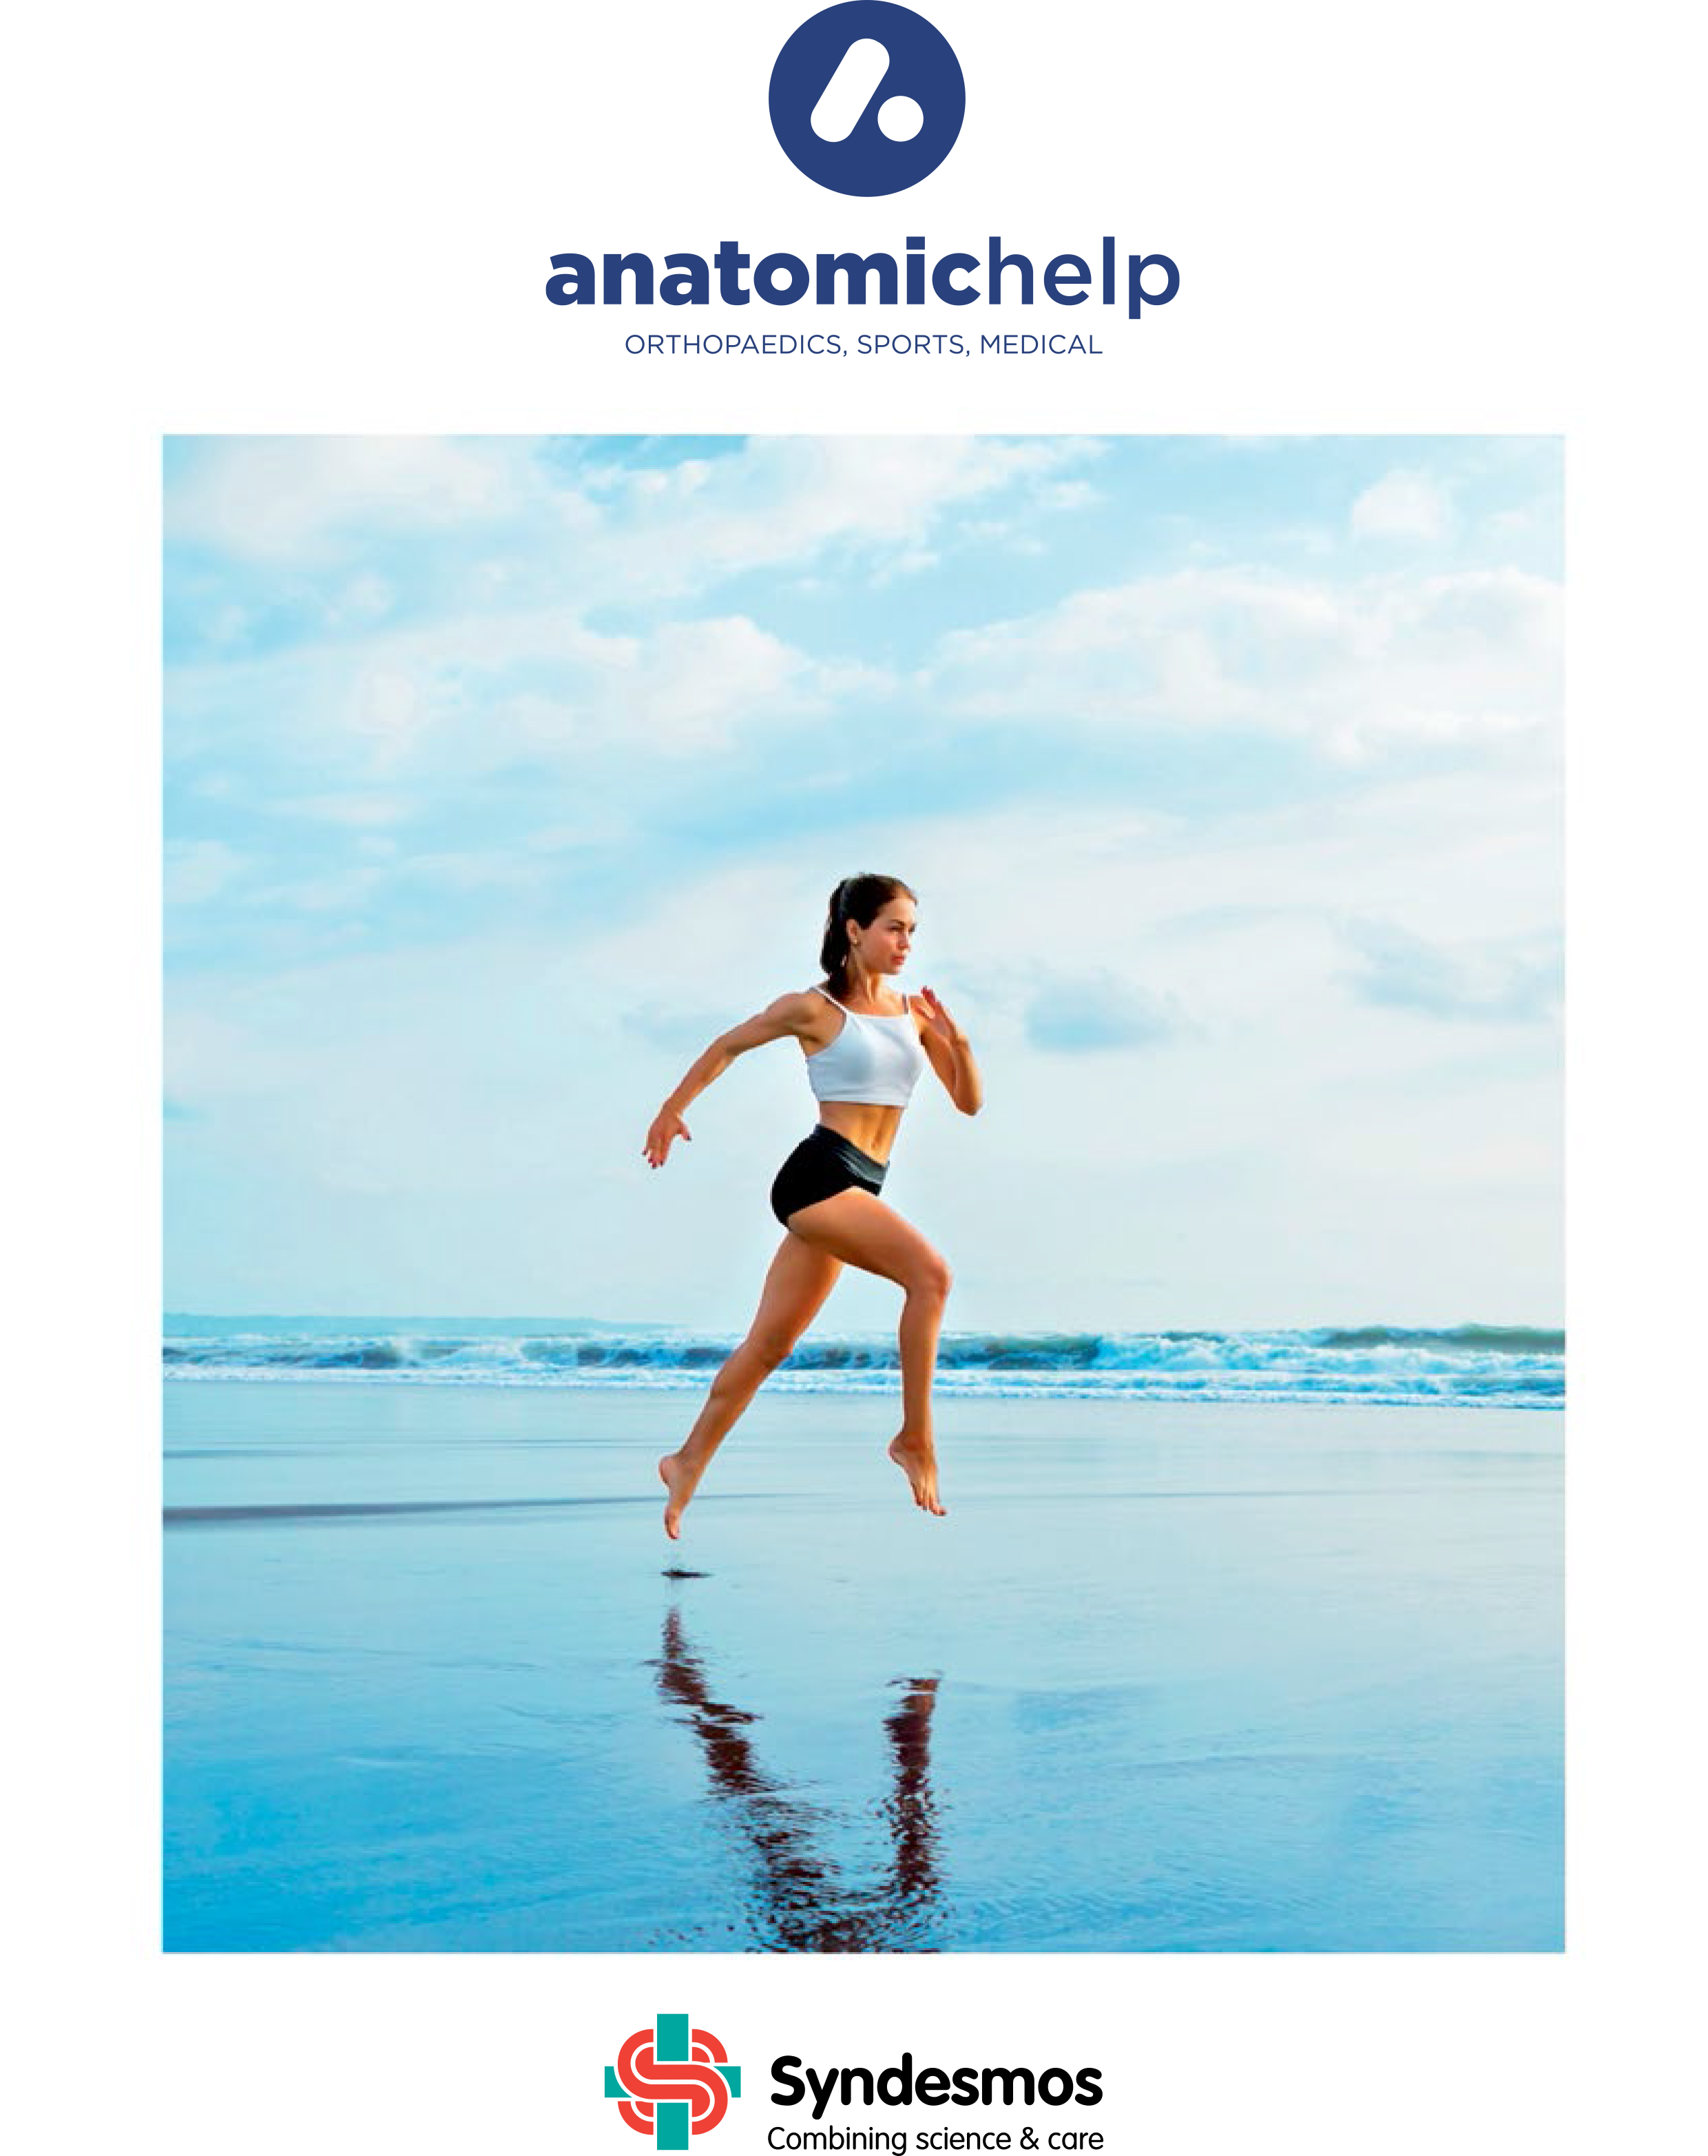 Anatomic Help product catalogue